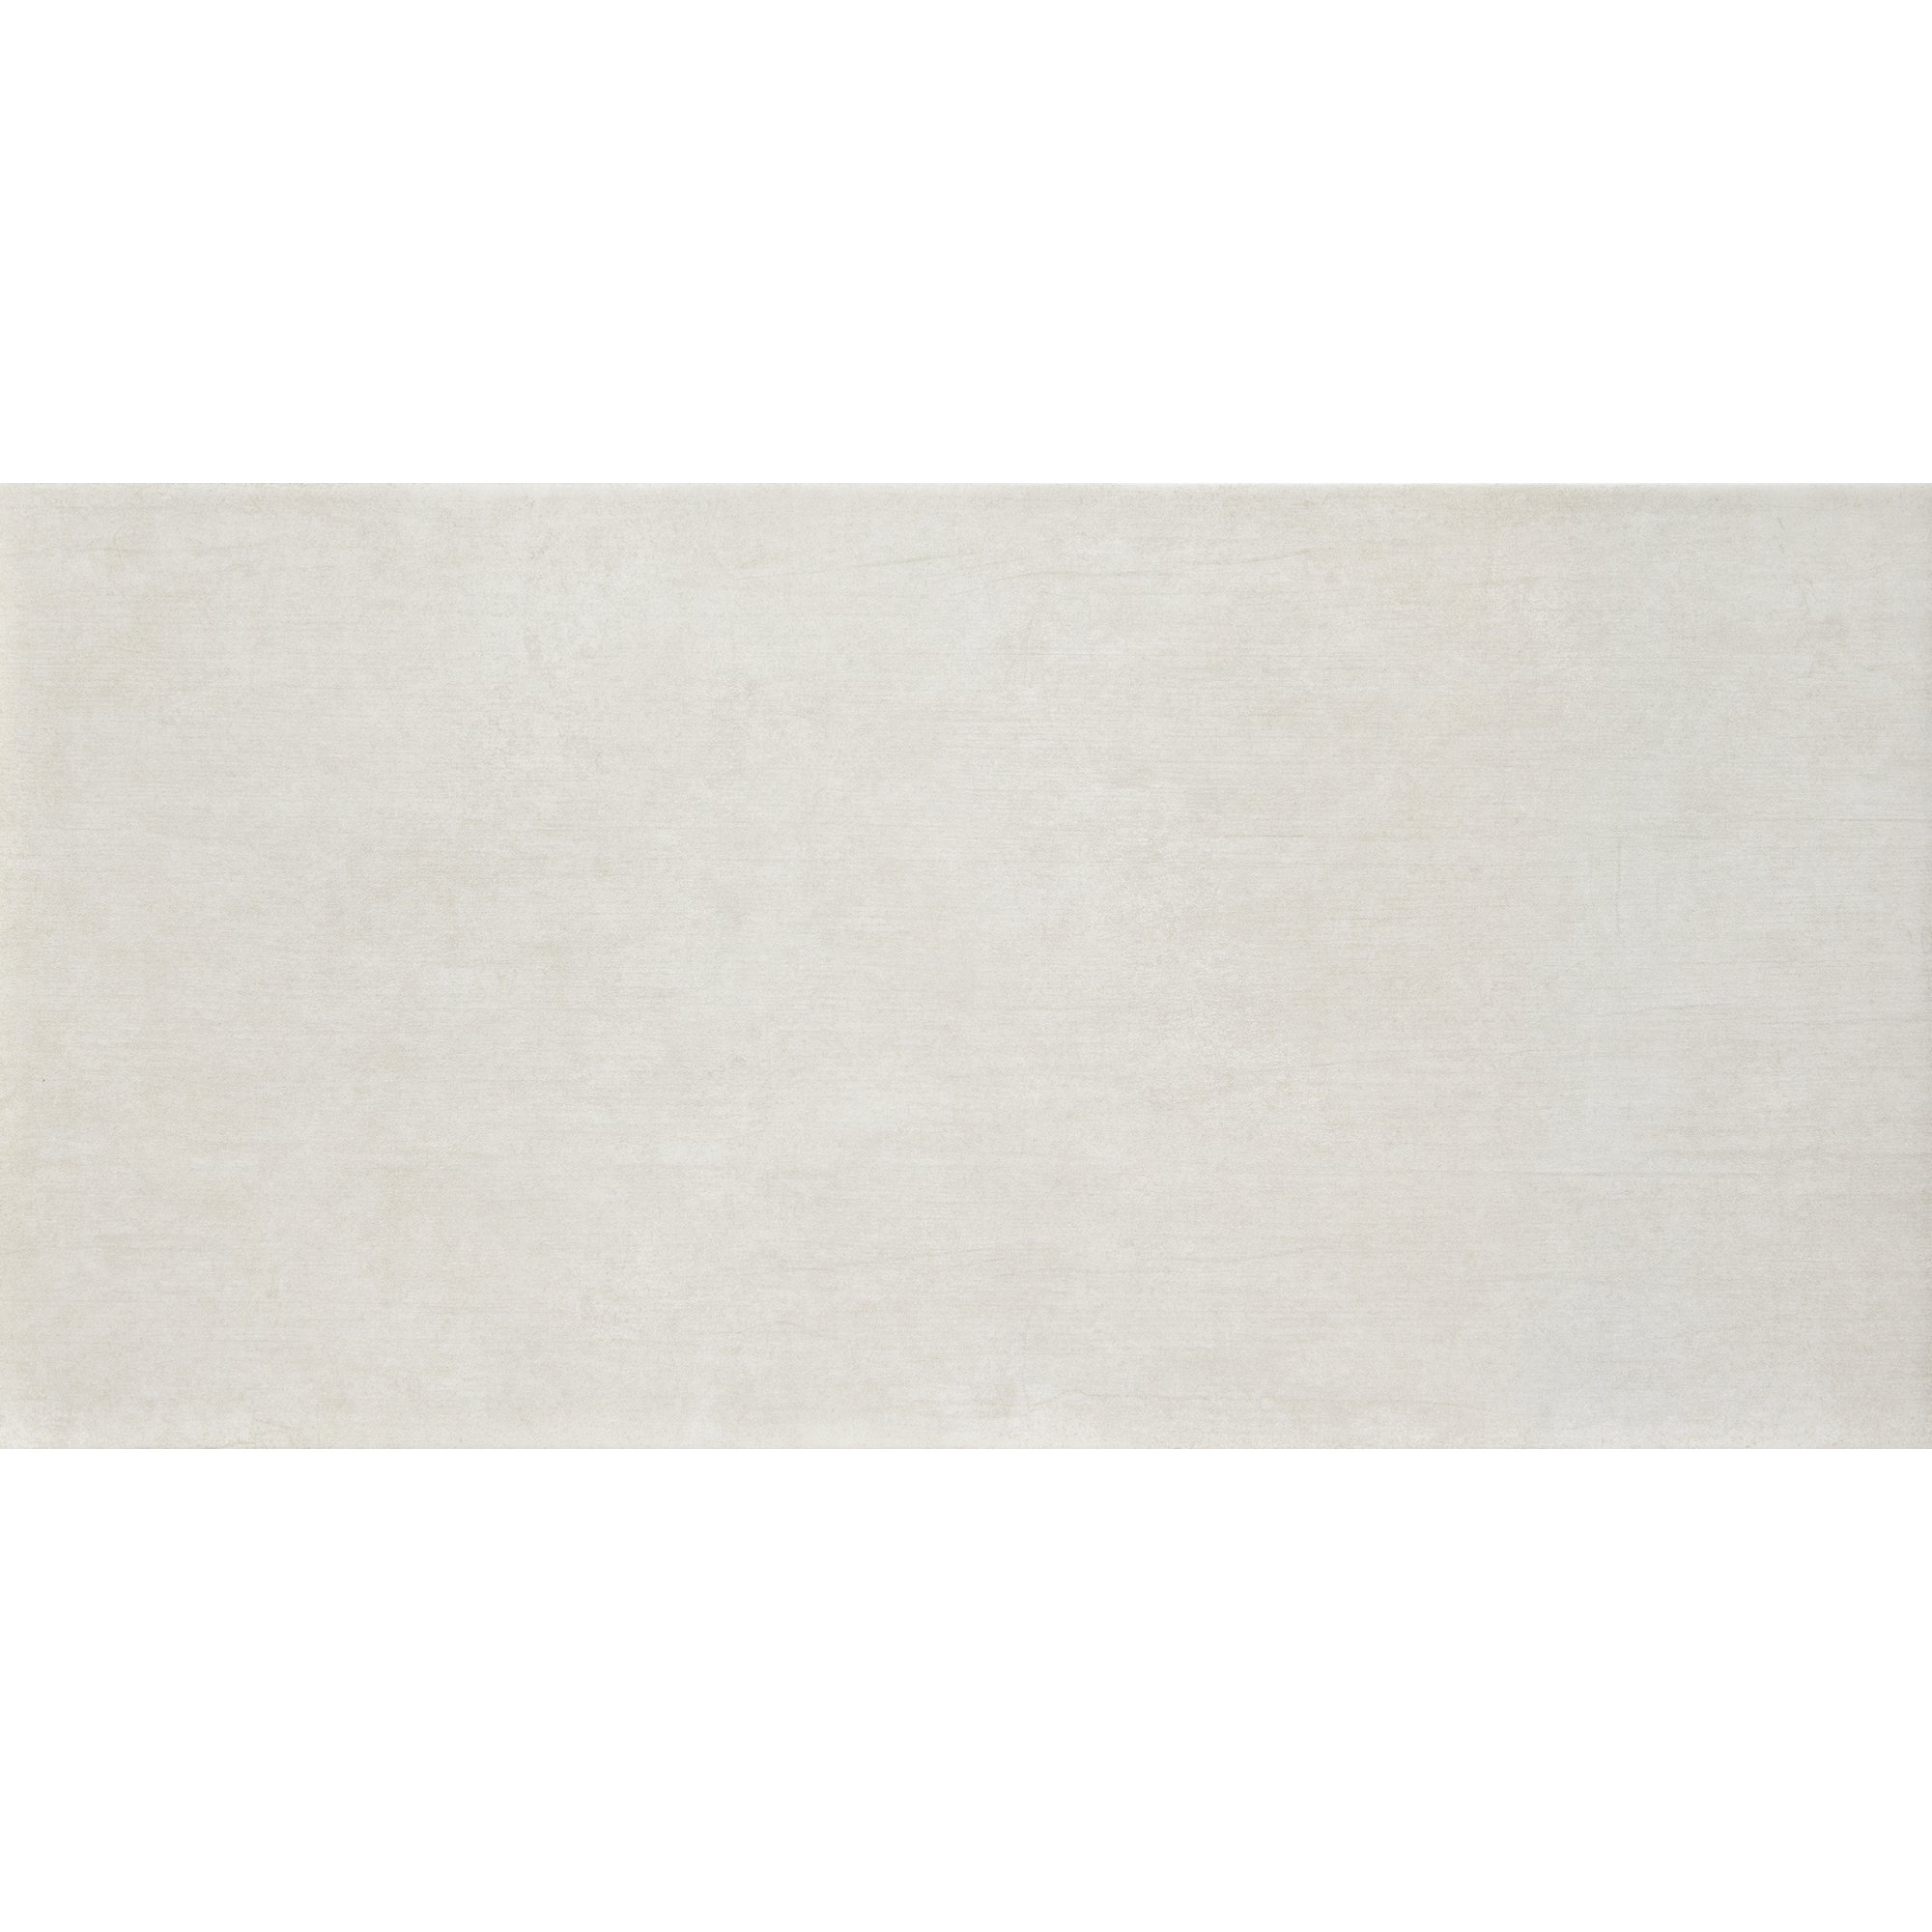 Wandfliese 'Legno' Steingut grau 29,8 x 59,8 cm + product picture